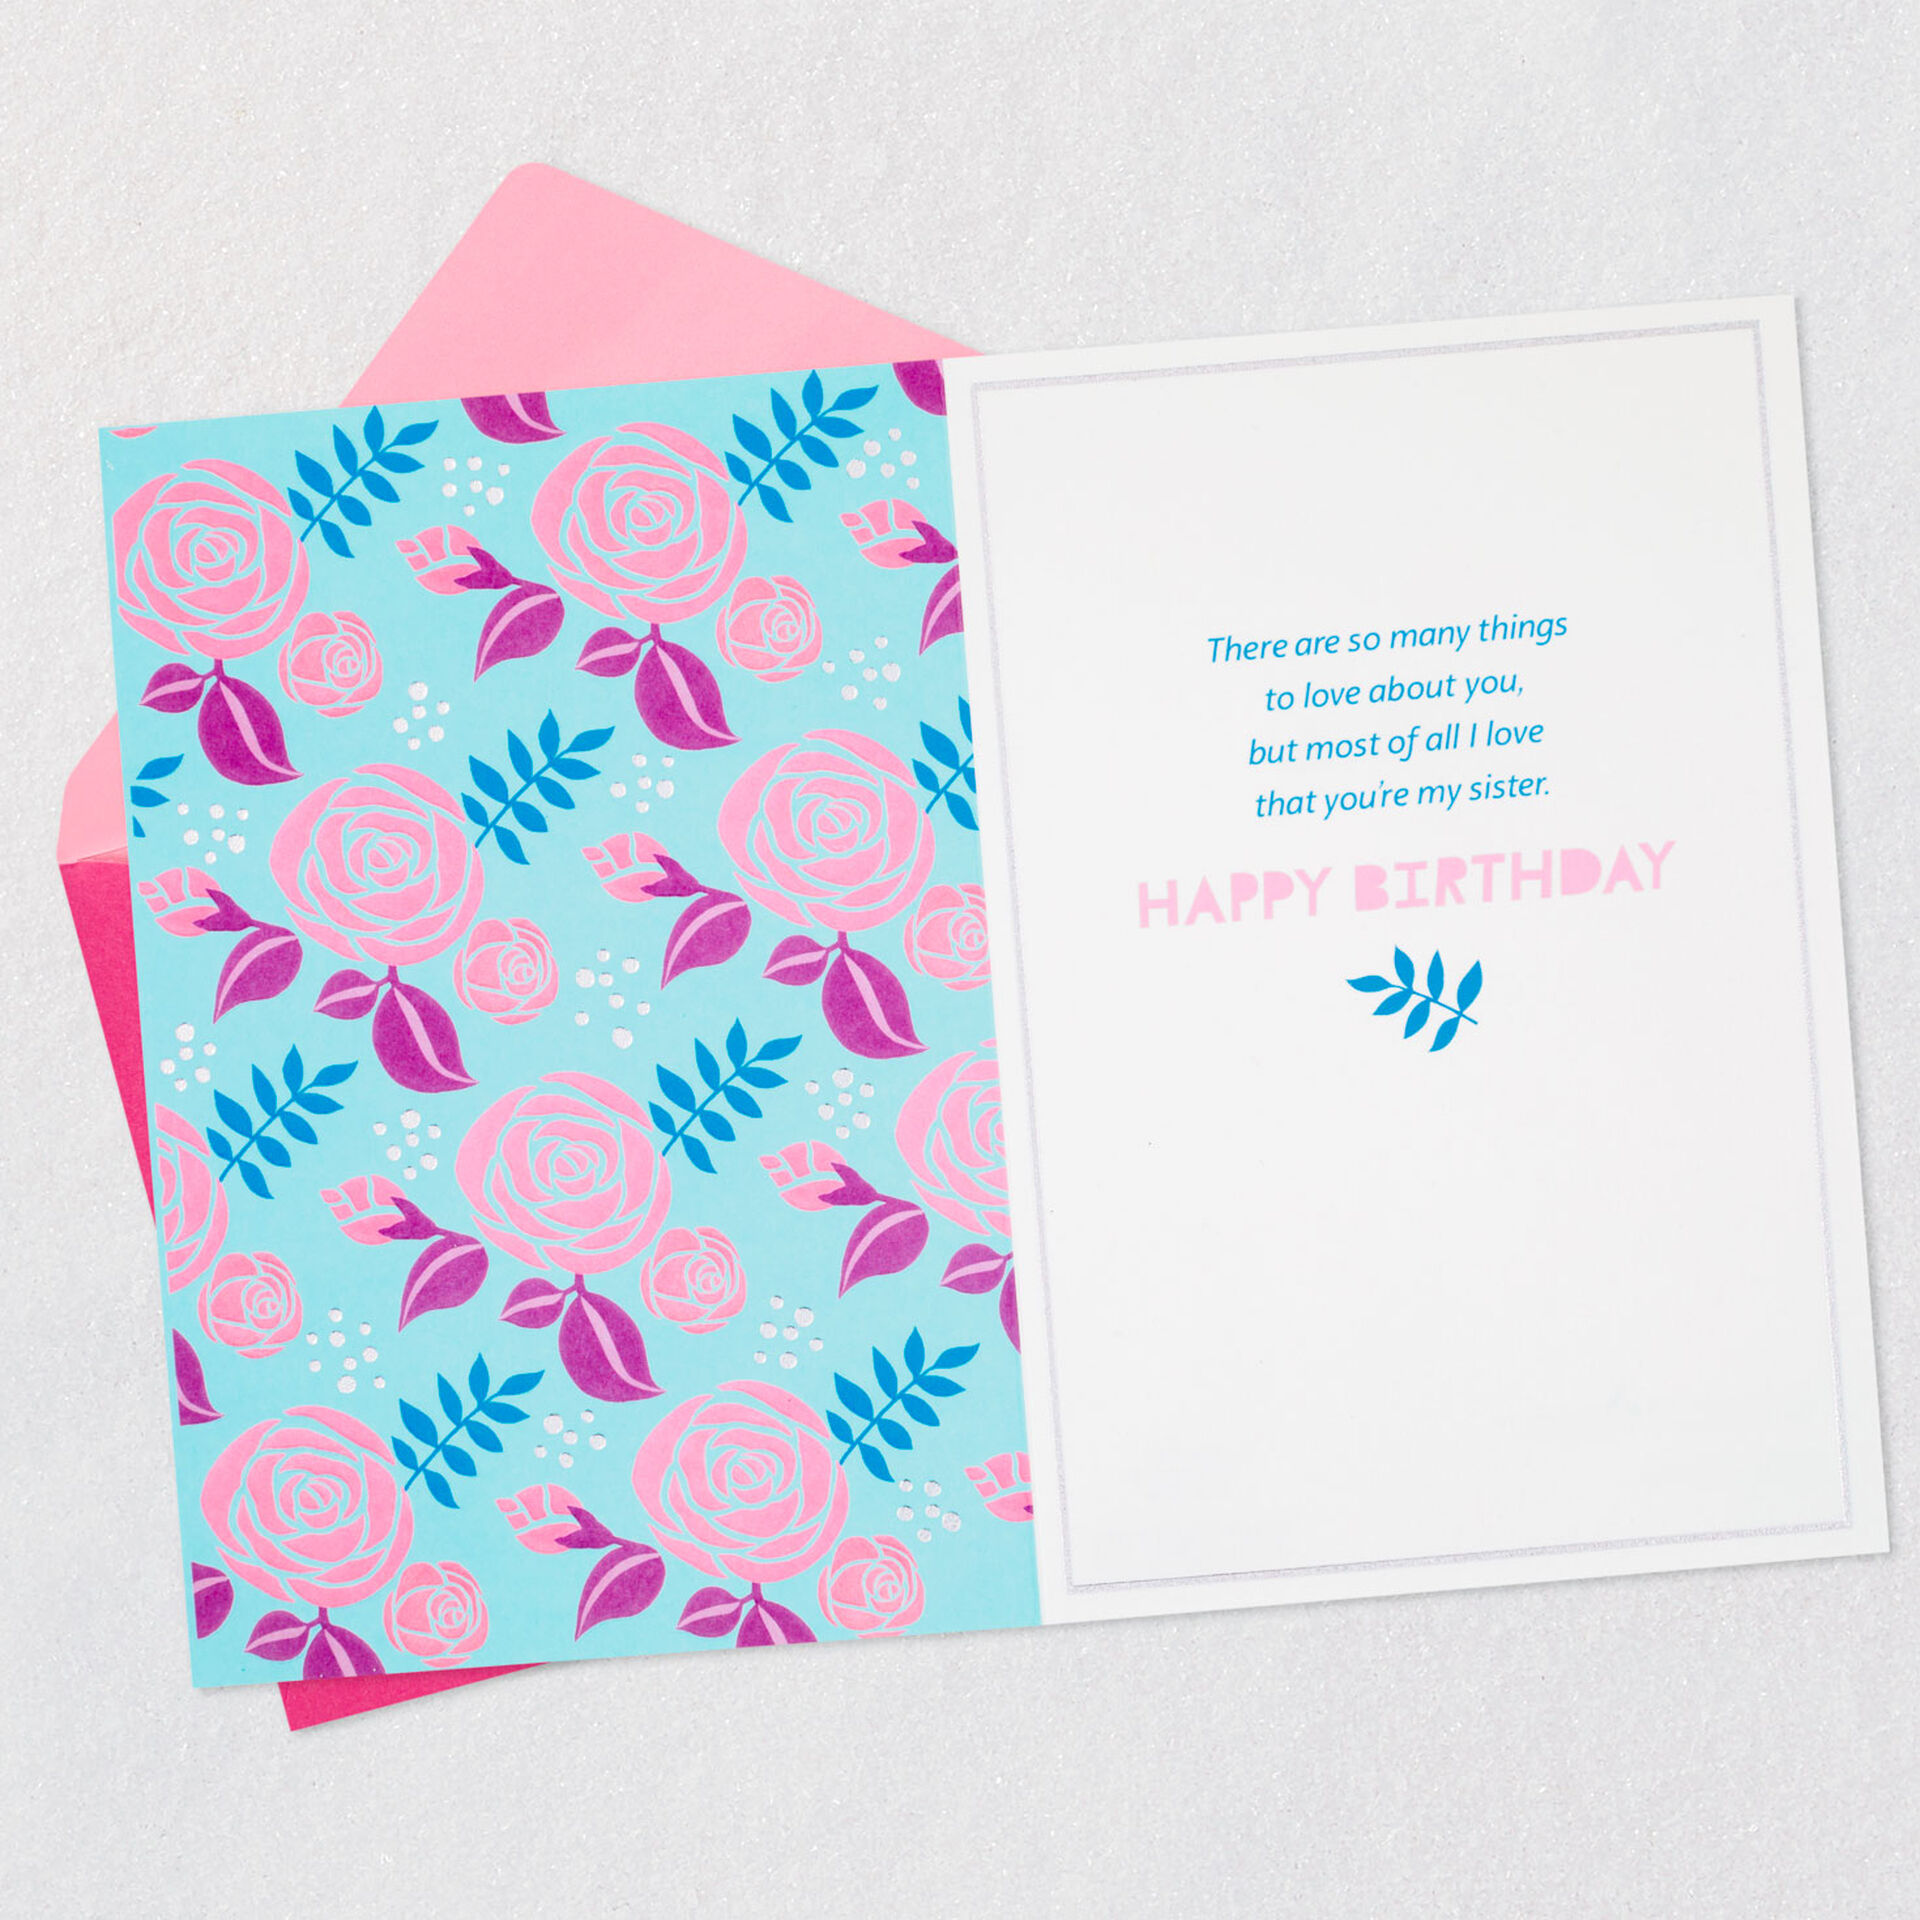 Pink-Rosette-Flowers-Birthday-Card-for-Sister_599FBD9848_03